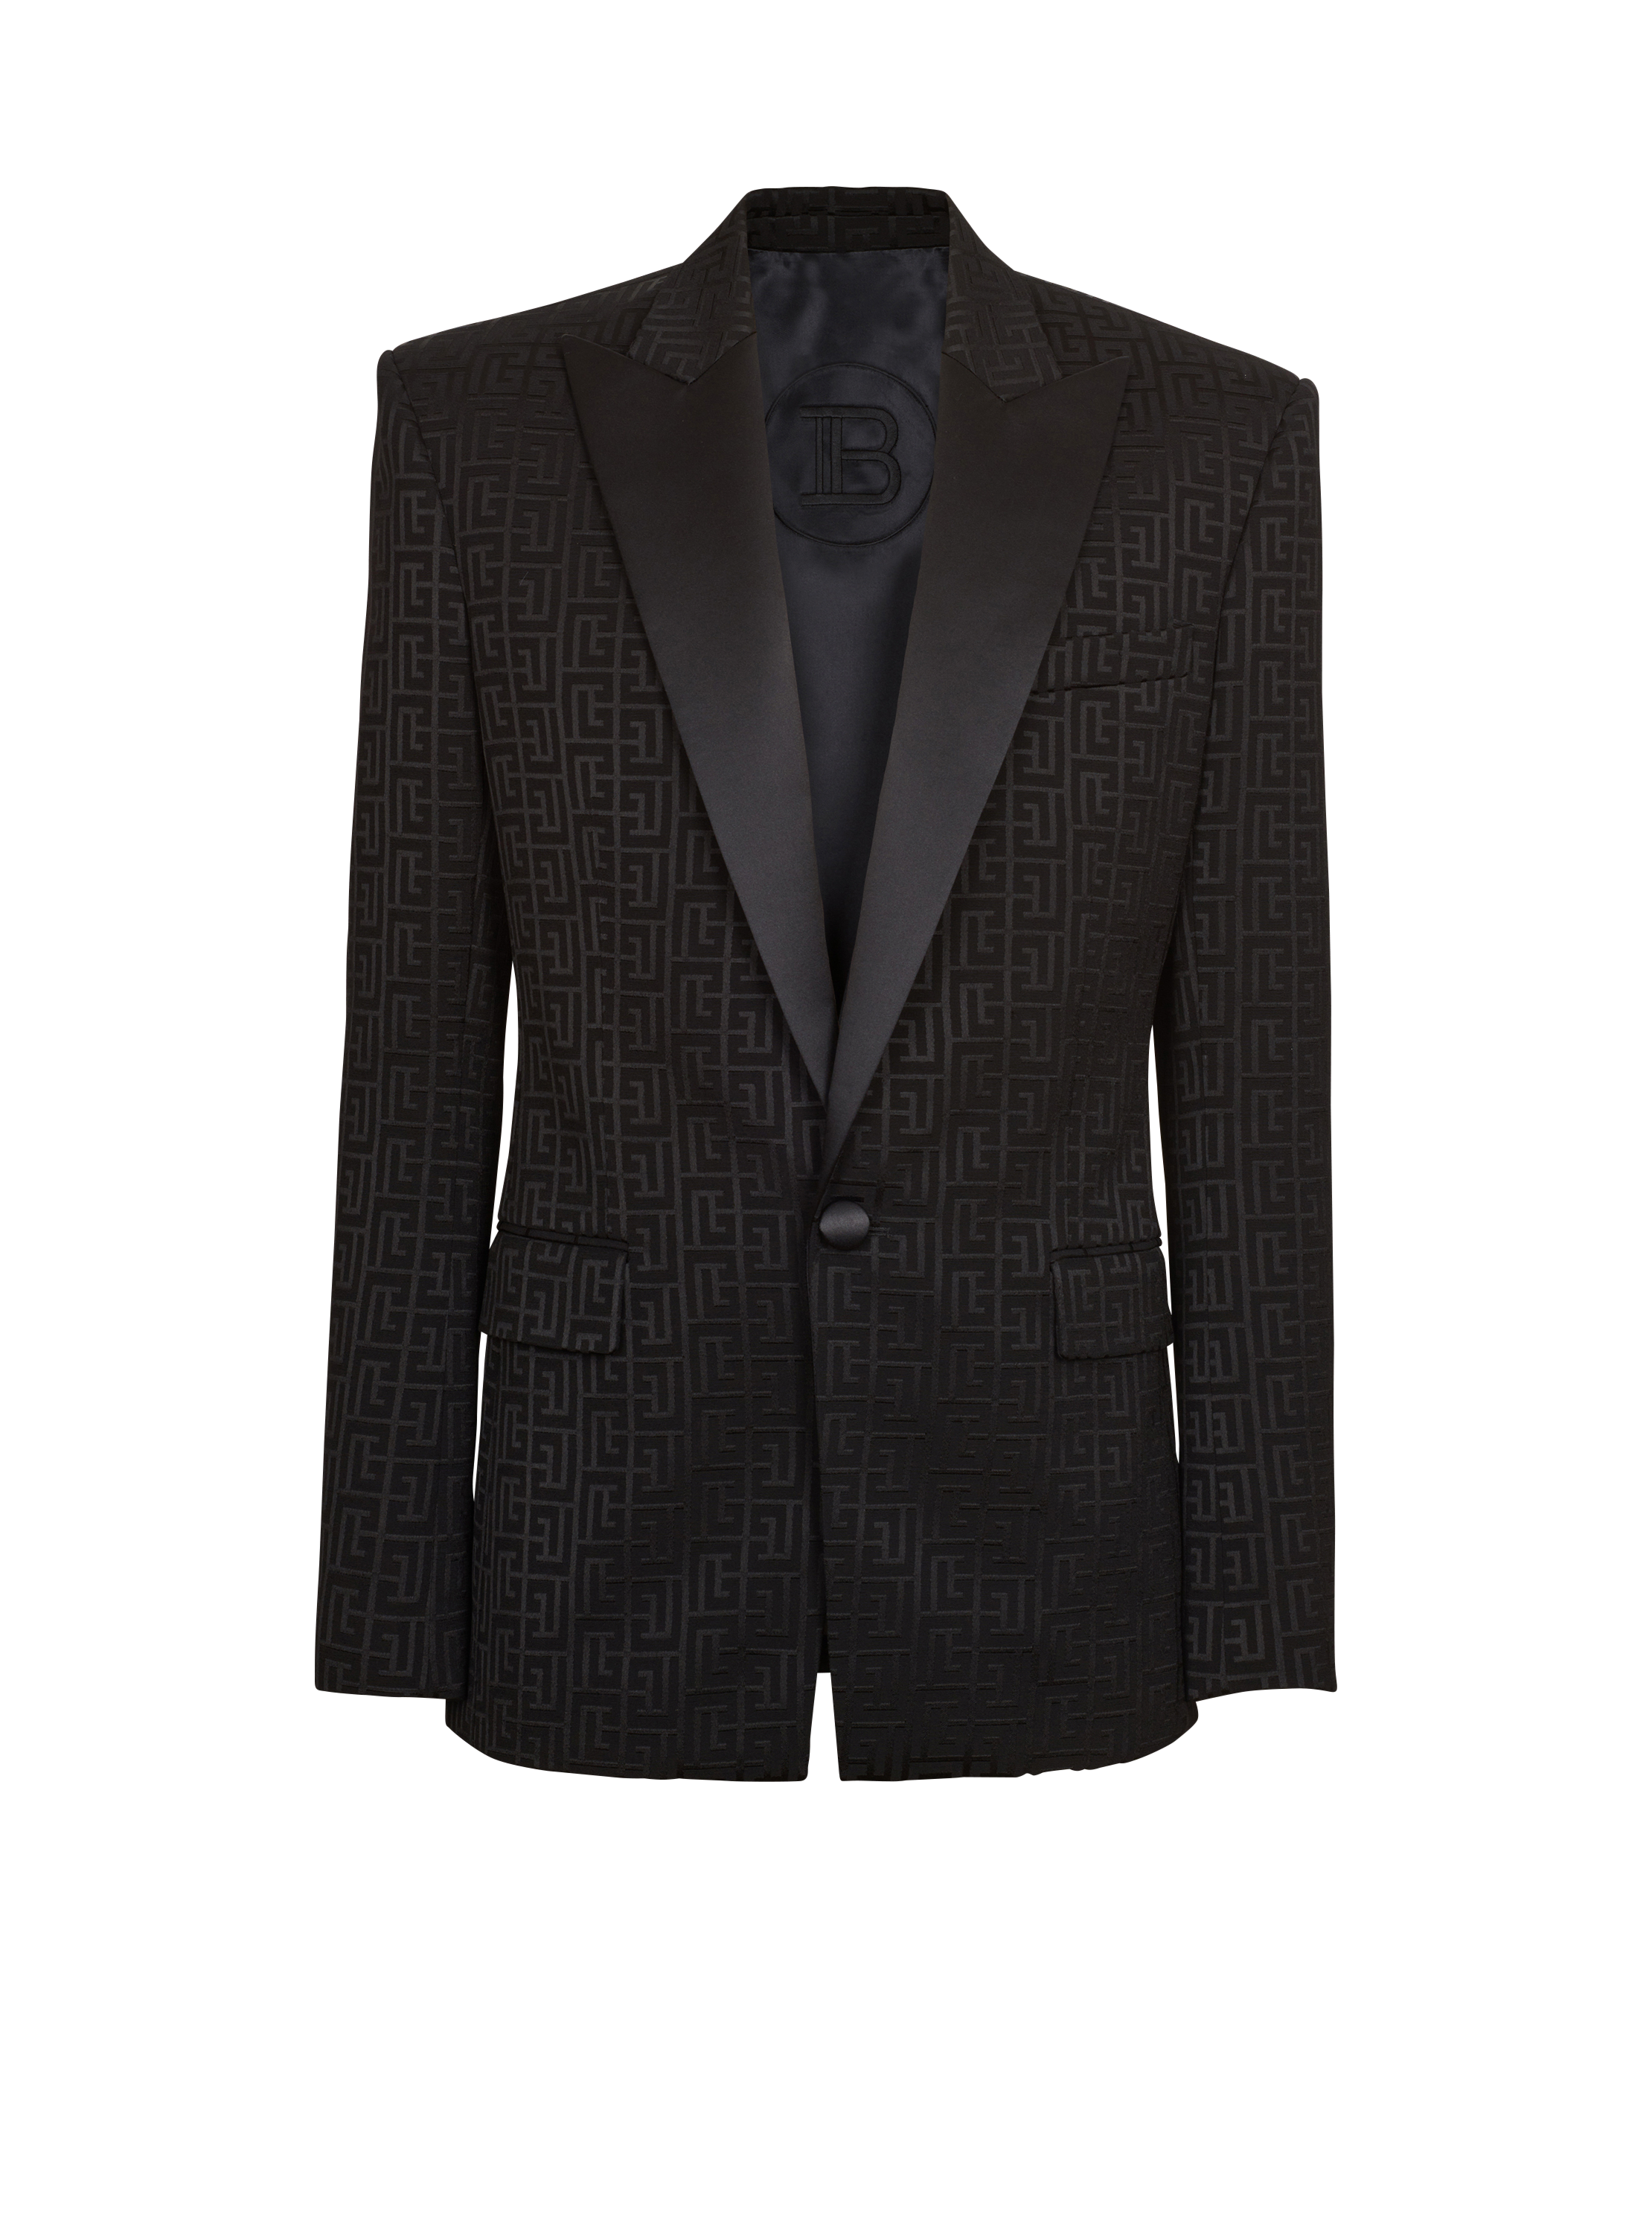 Monogrammed jacquard tuxedo jacket, black, hi-res